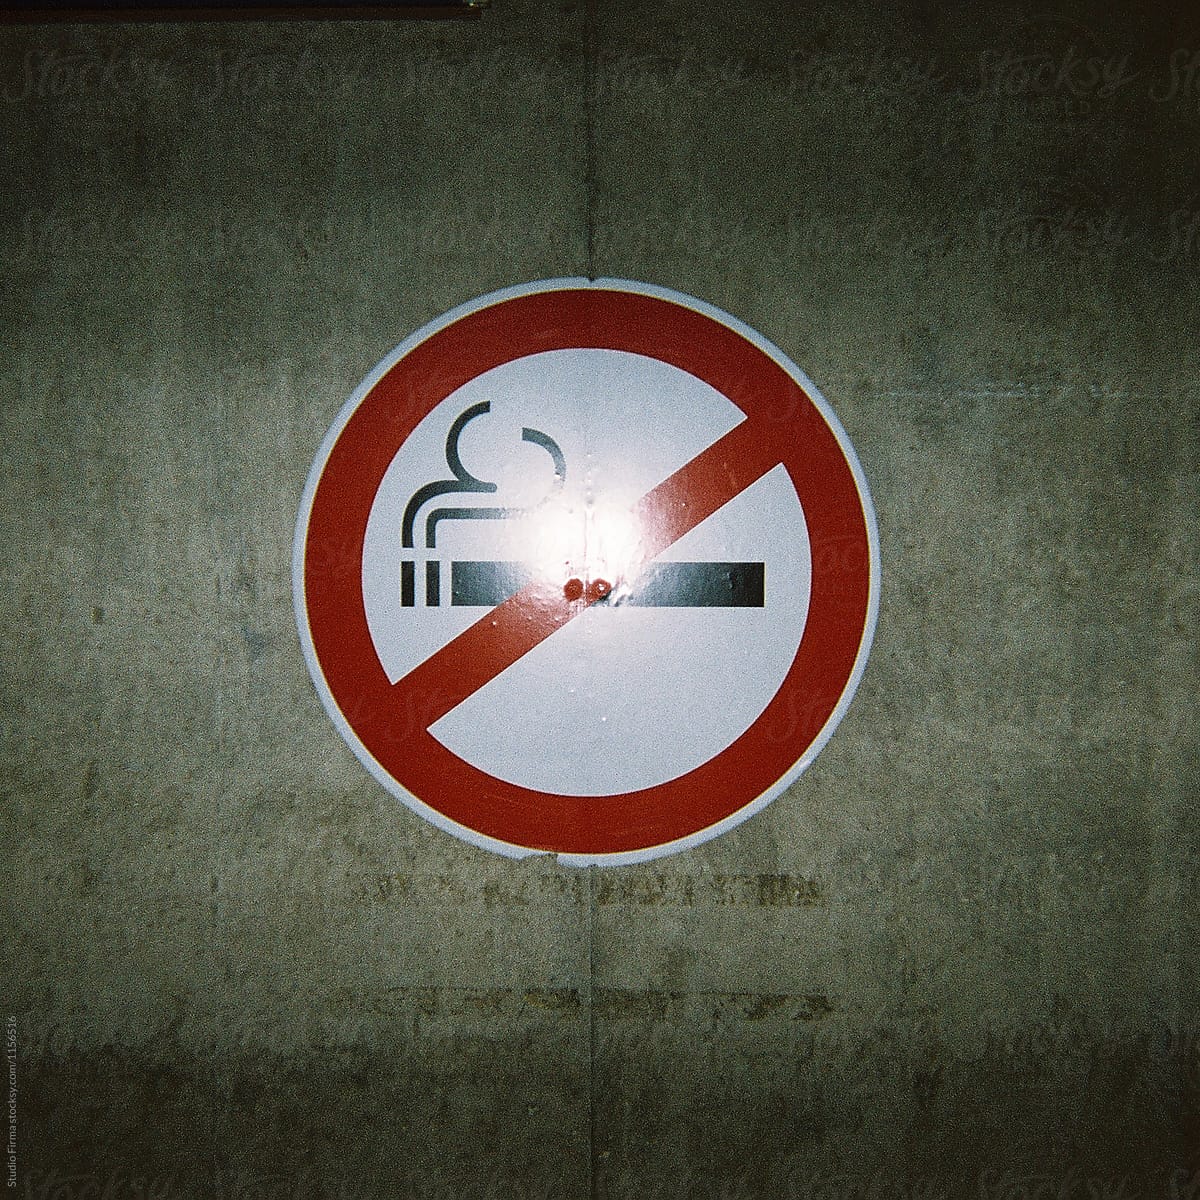 Smoking forbidden!